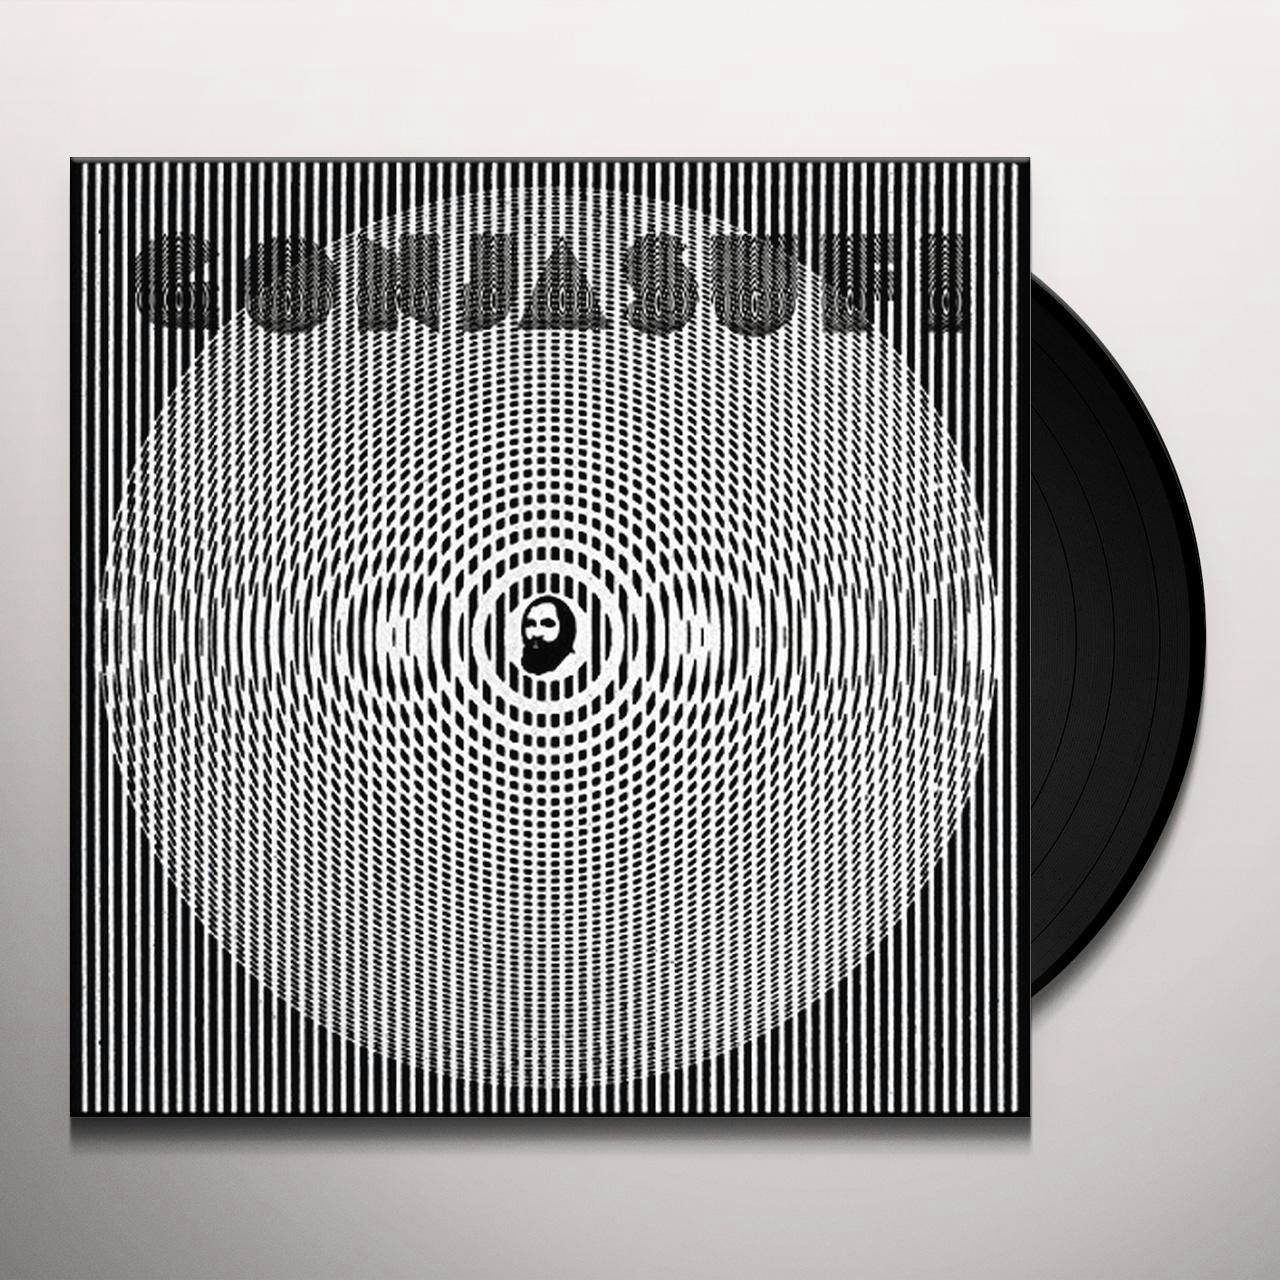 Gonjasufi Sufi A Killer Vinyl Record A sufi and a killer (bonus track version). merchbar